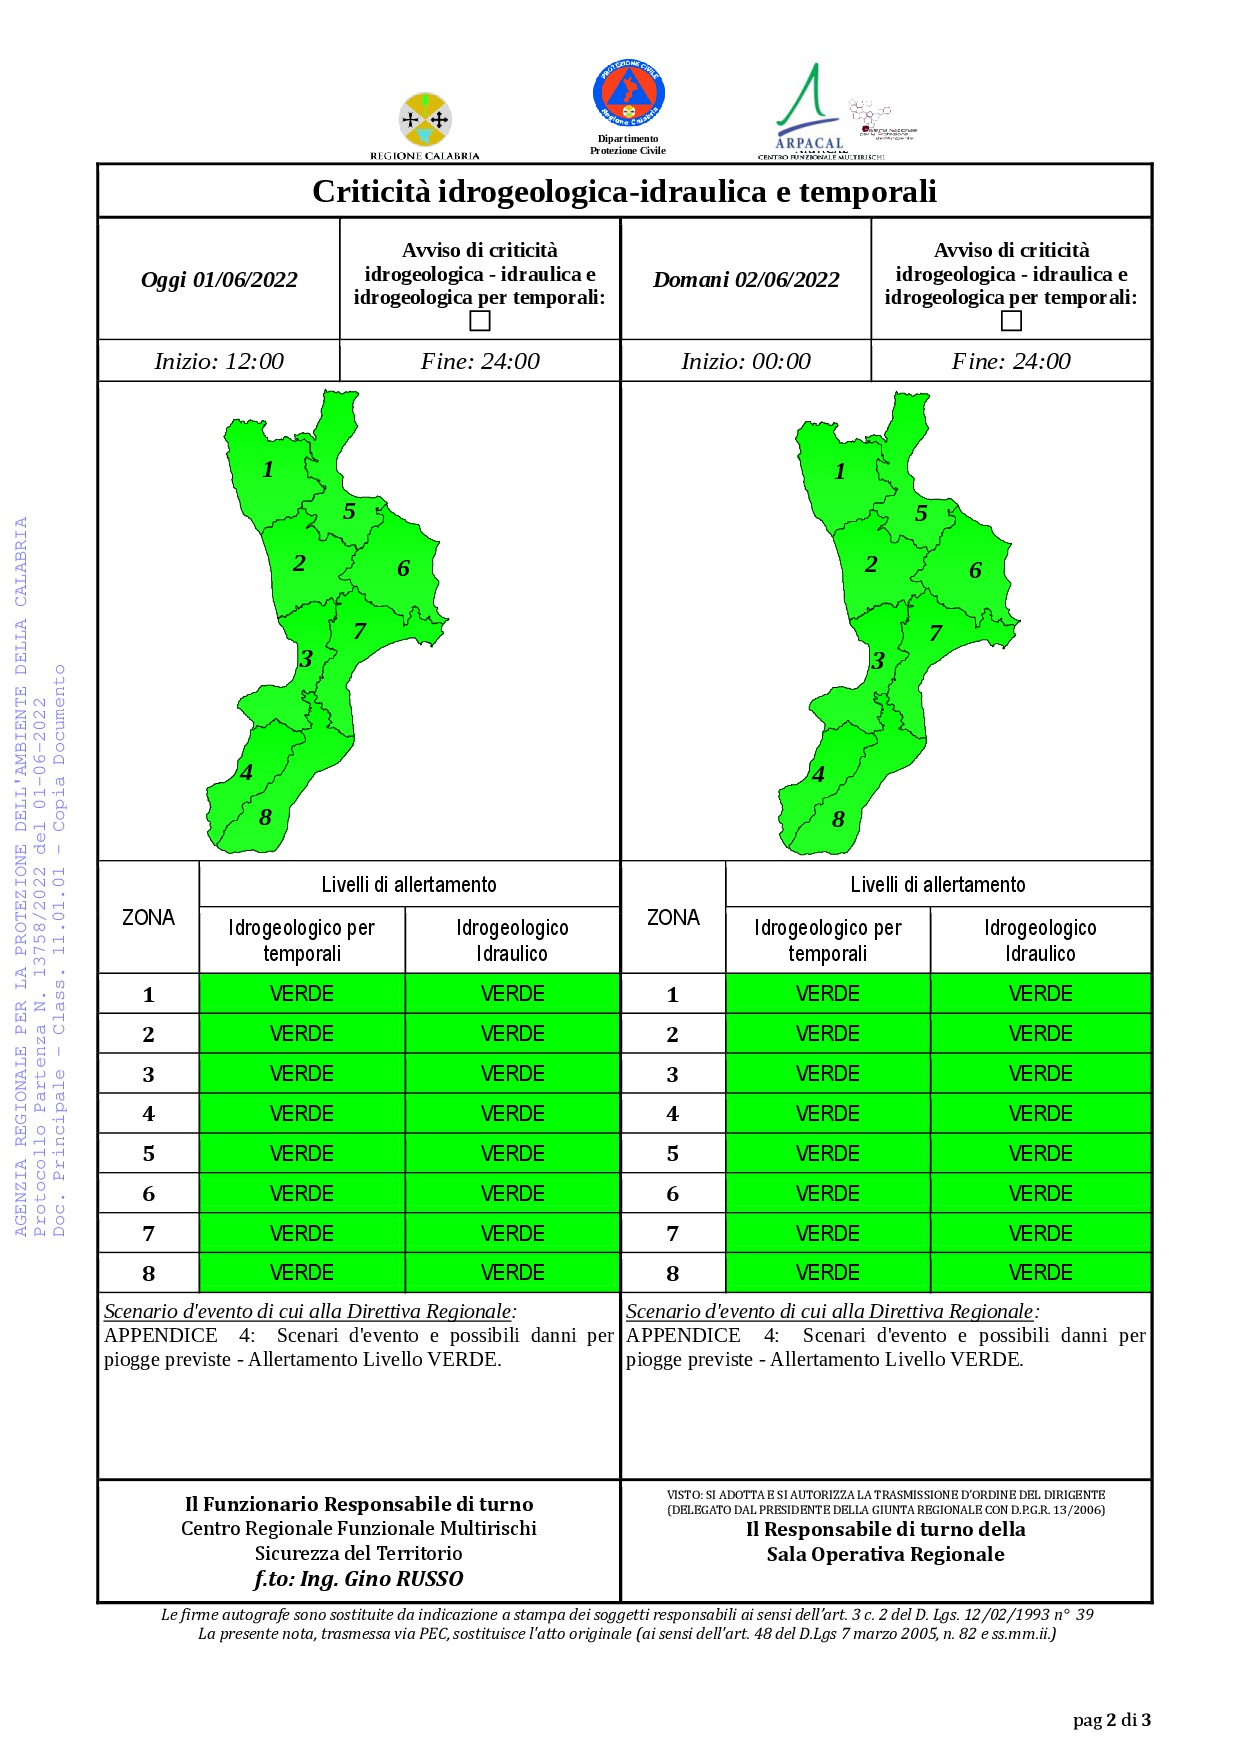 Criticità idrogeologica-idraulica e temporali in Calabria 01-06-2022